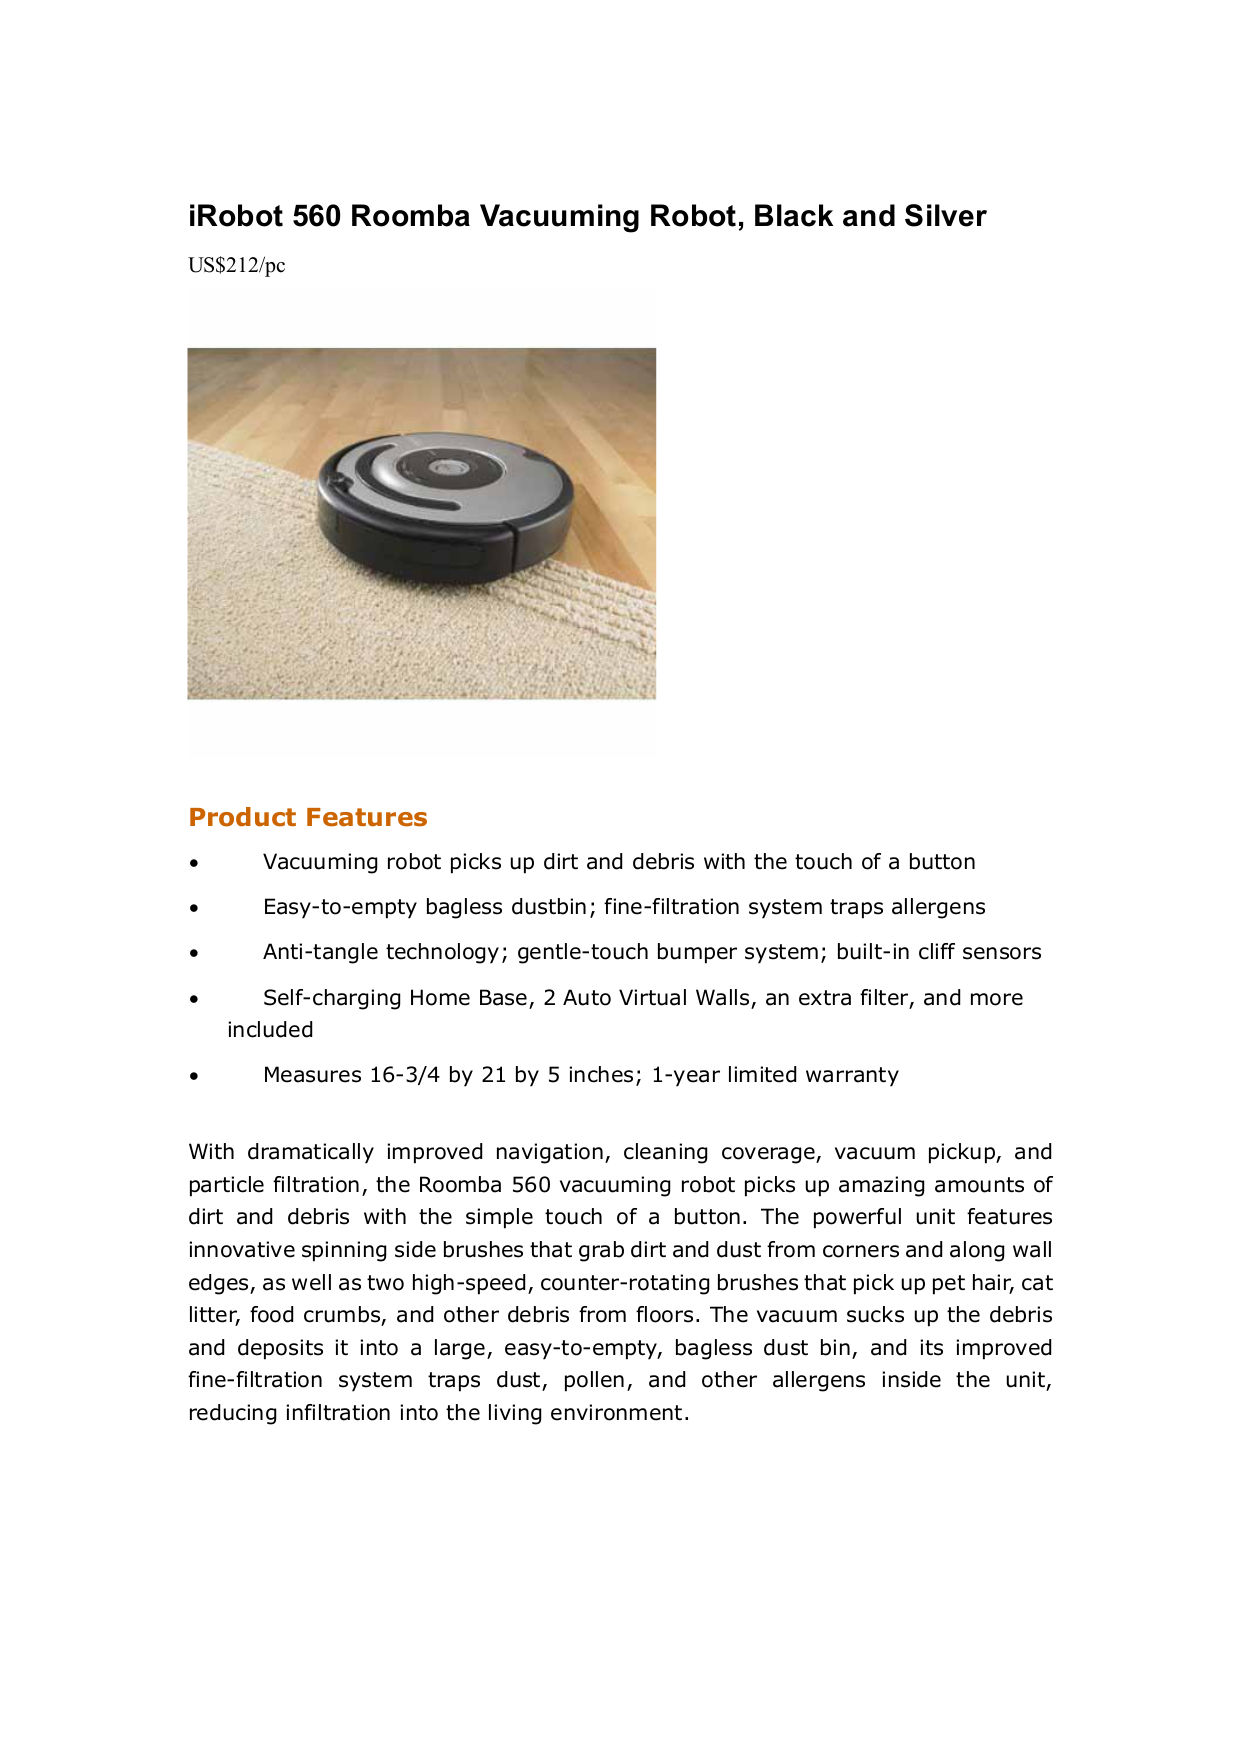 Download free pdf for iRobot Roomba 4210 Vacuum manual